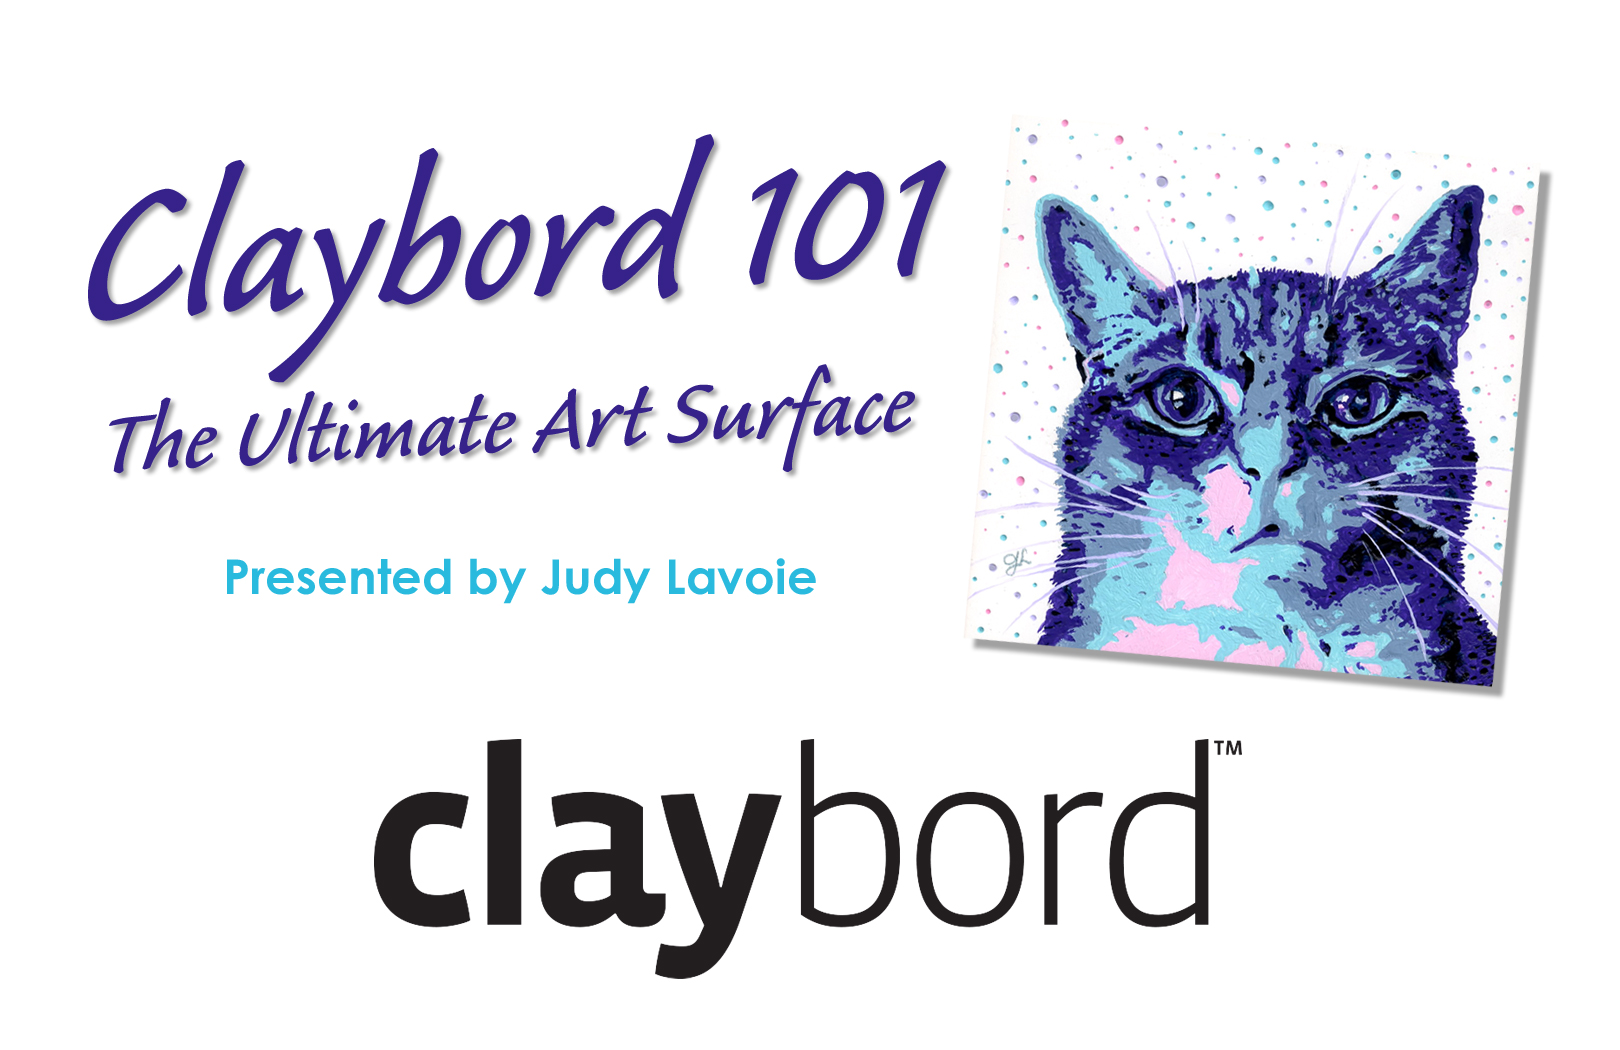 Claybord™ 101 title